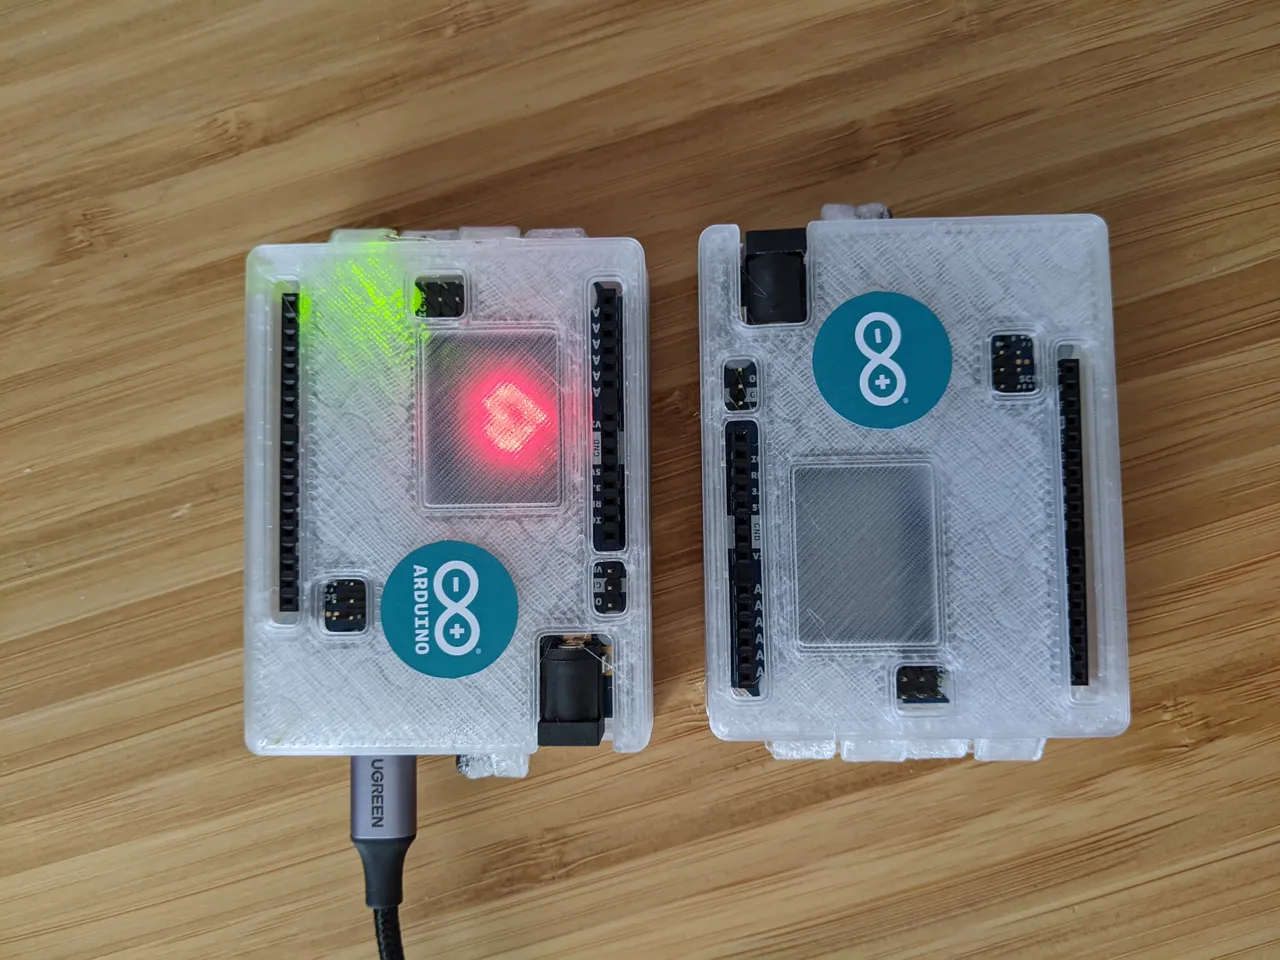 Arduino Uno R4 WiFi Case by pfelecan